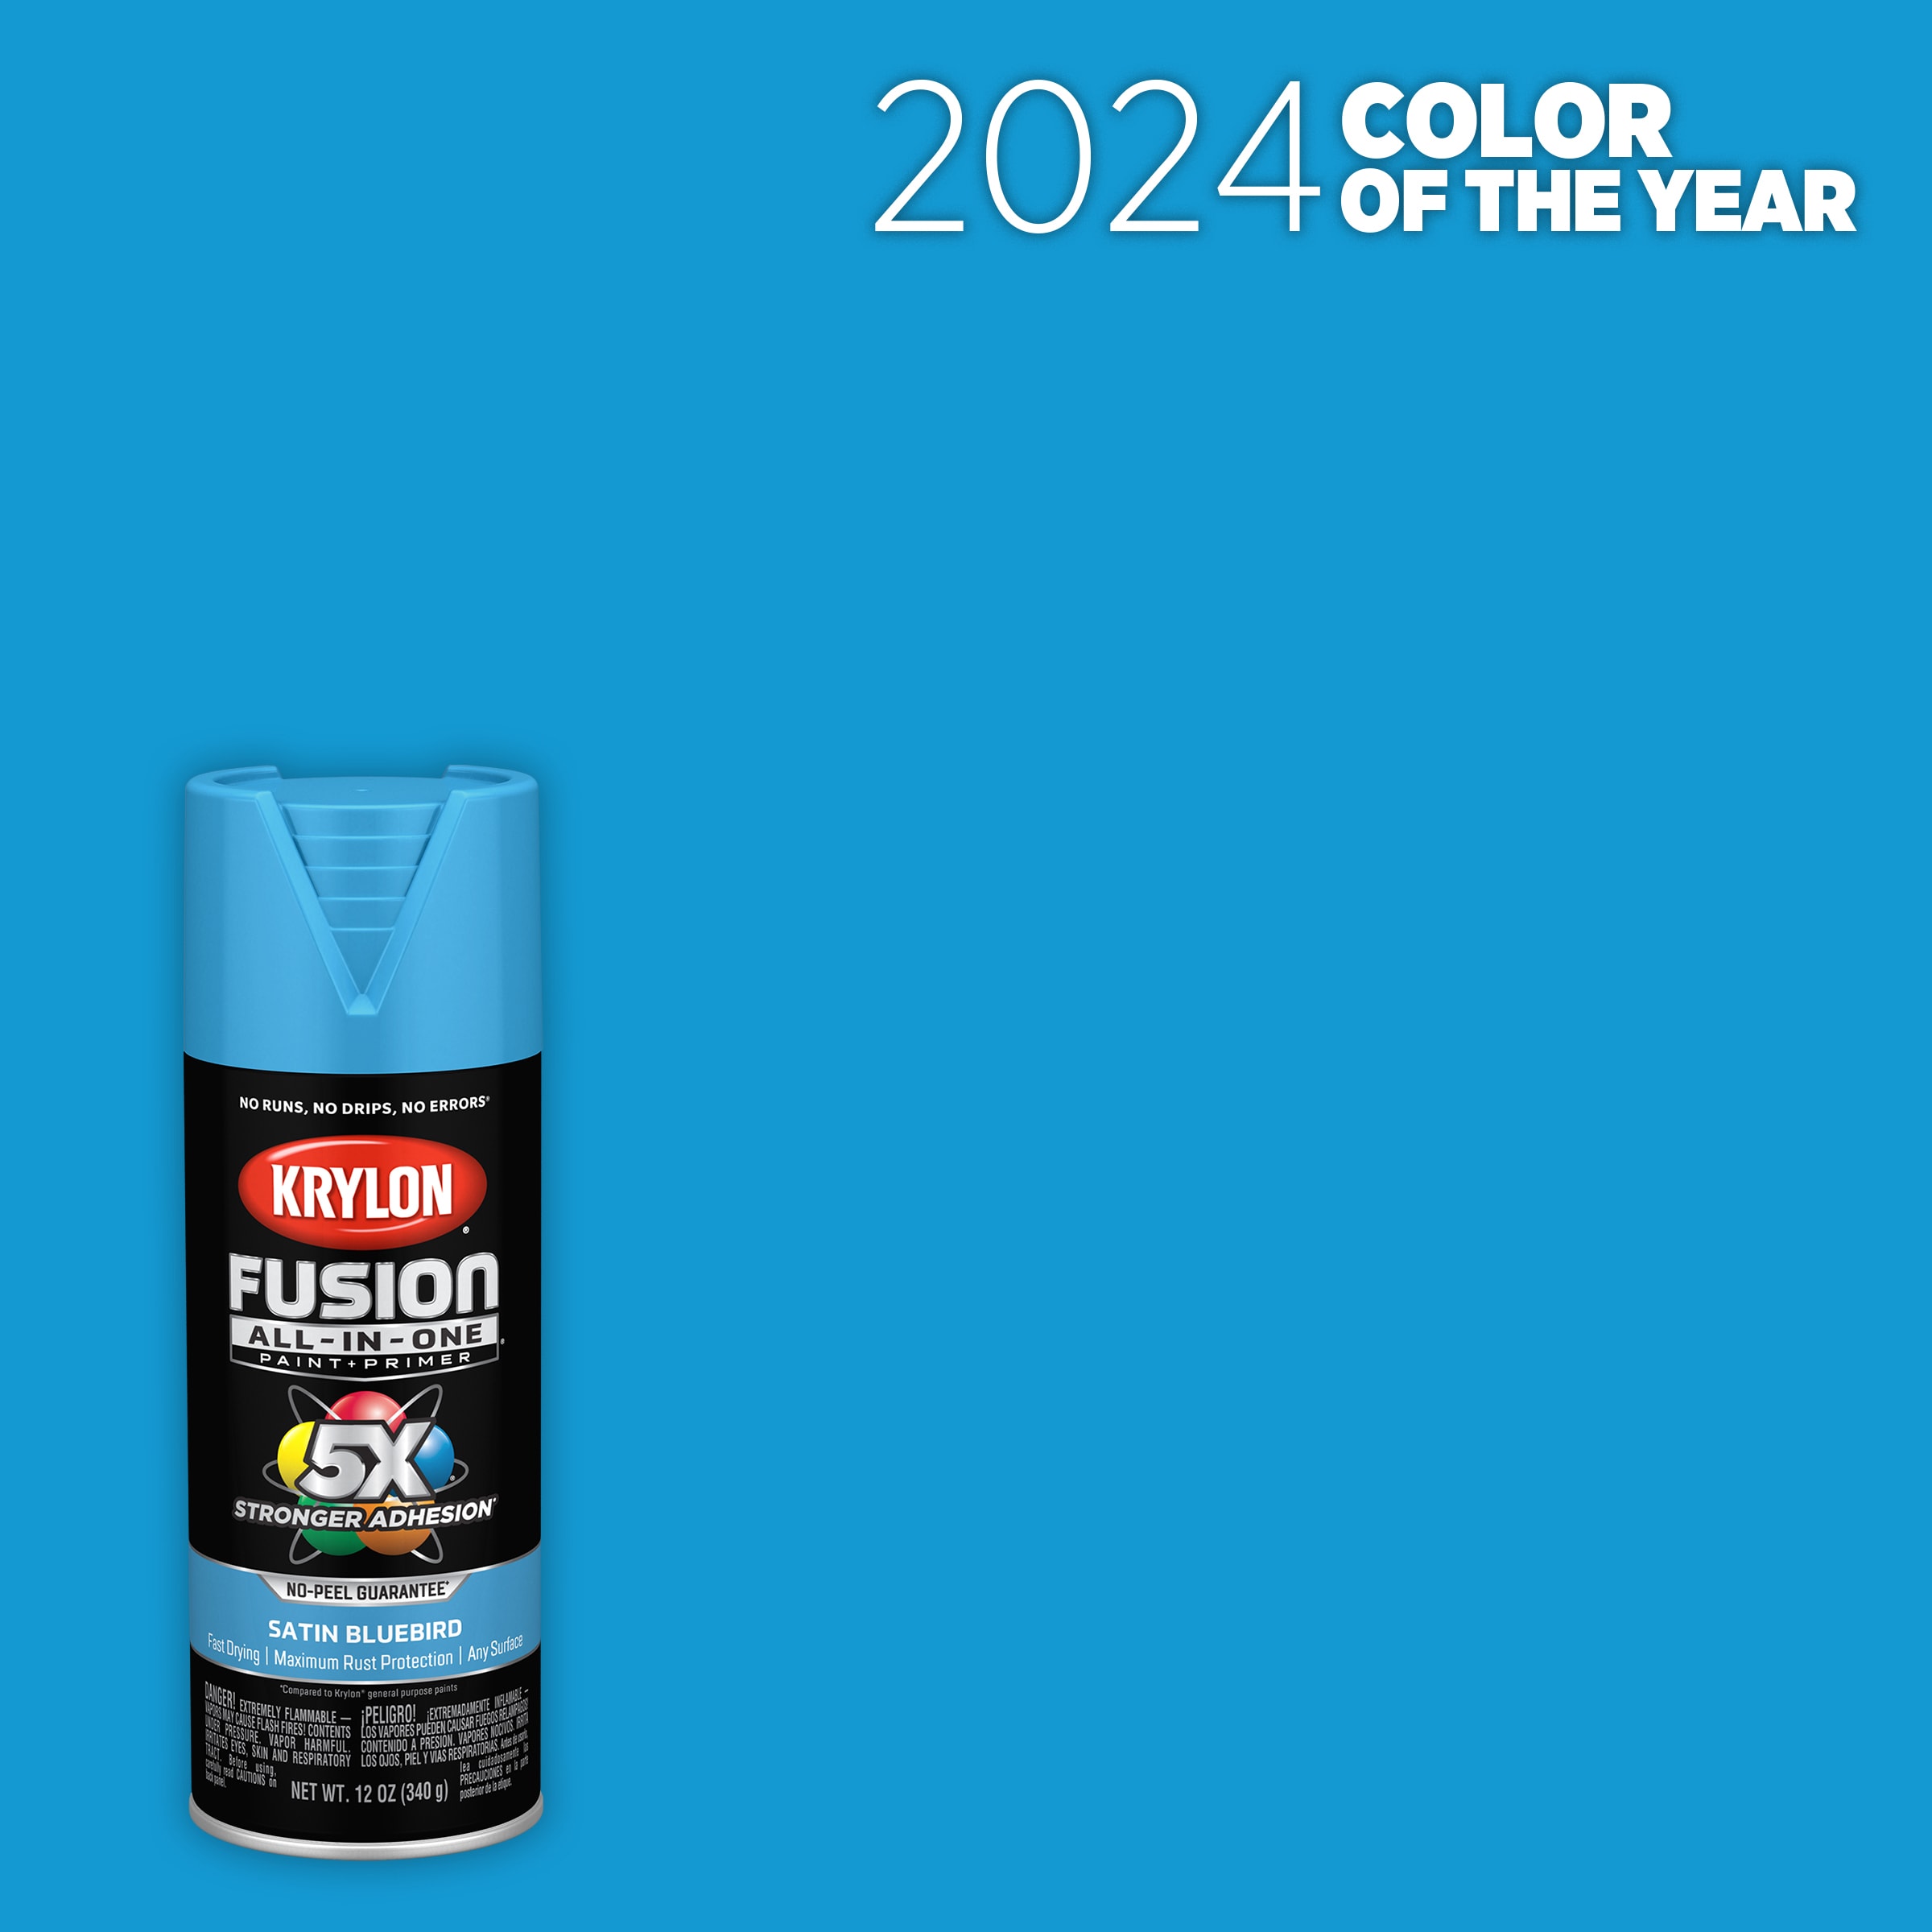 KRYLON CAMOUFLAGE spray paint - ADV80 Hood Louvers - Rod L…